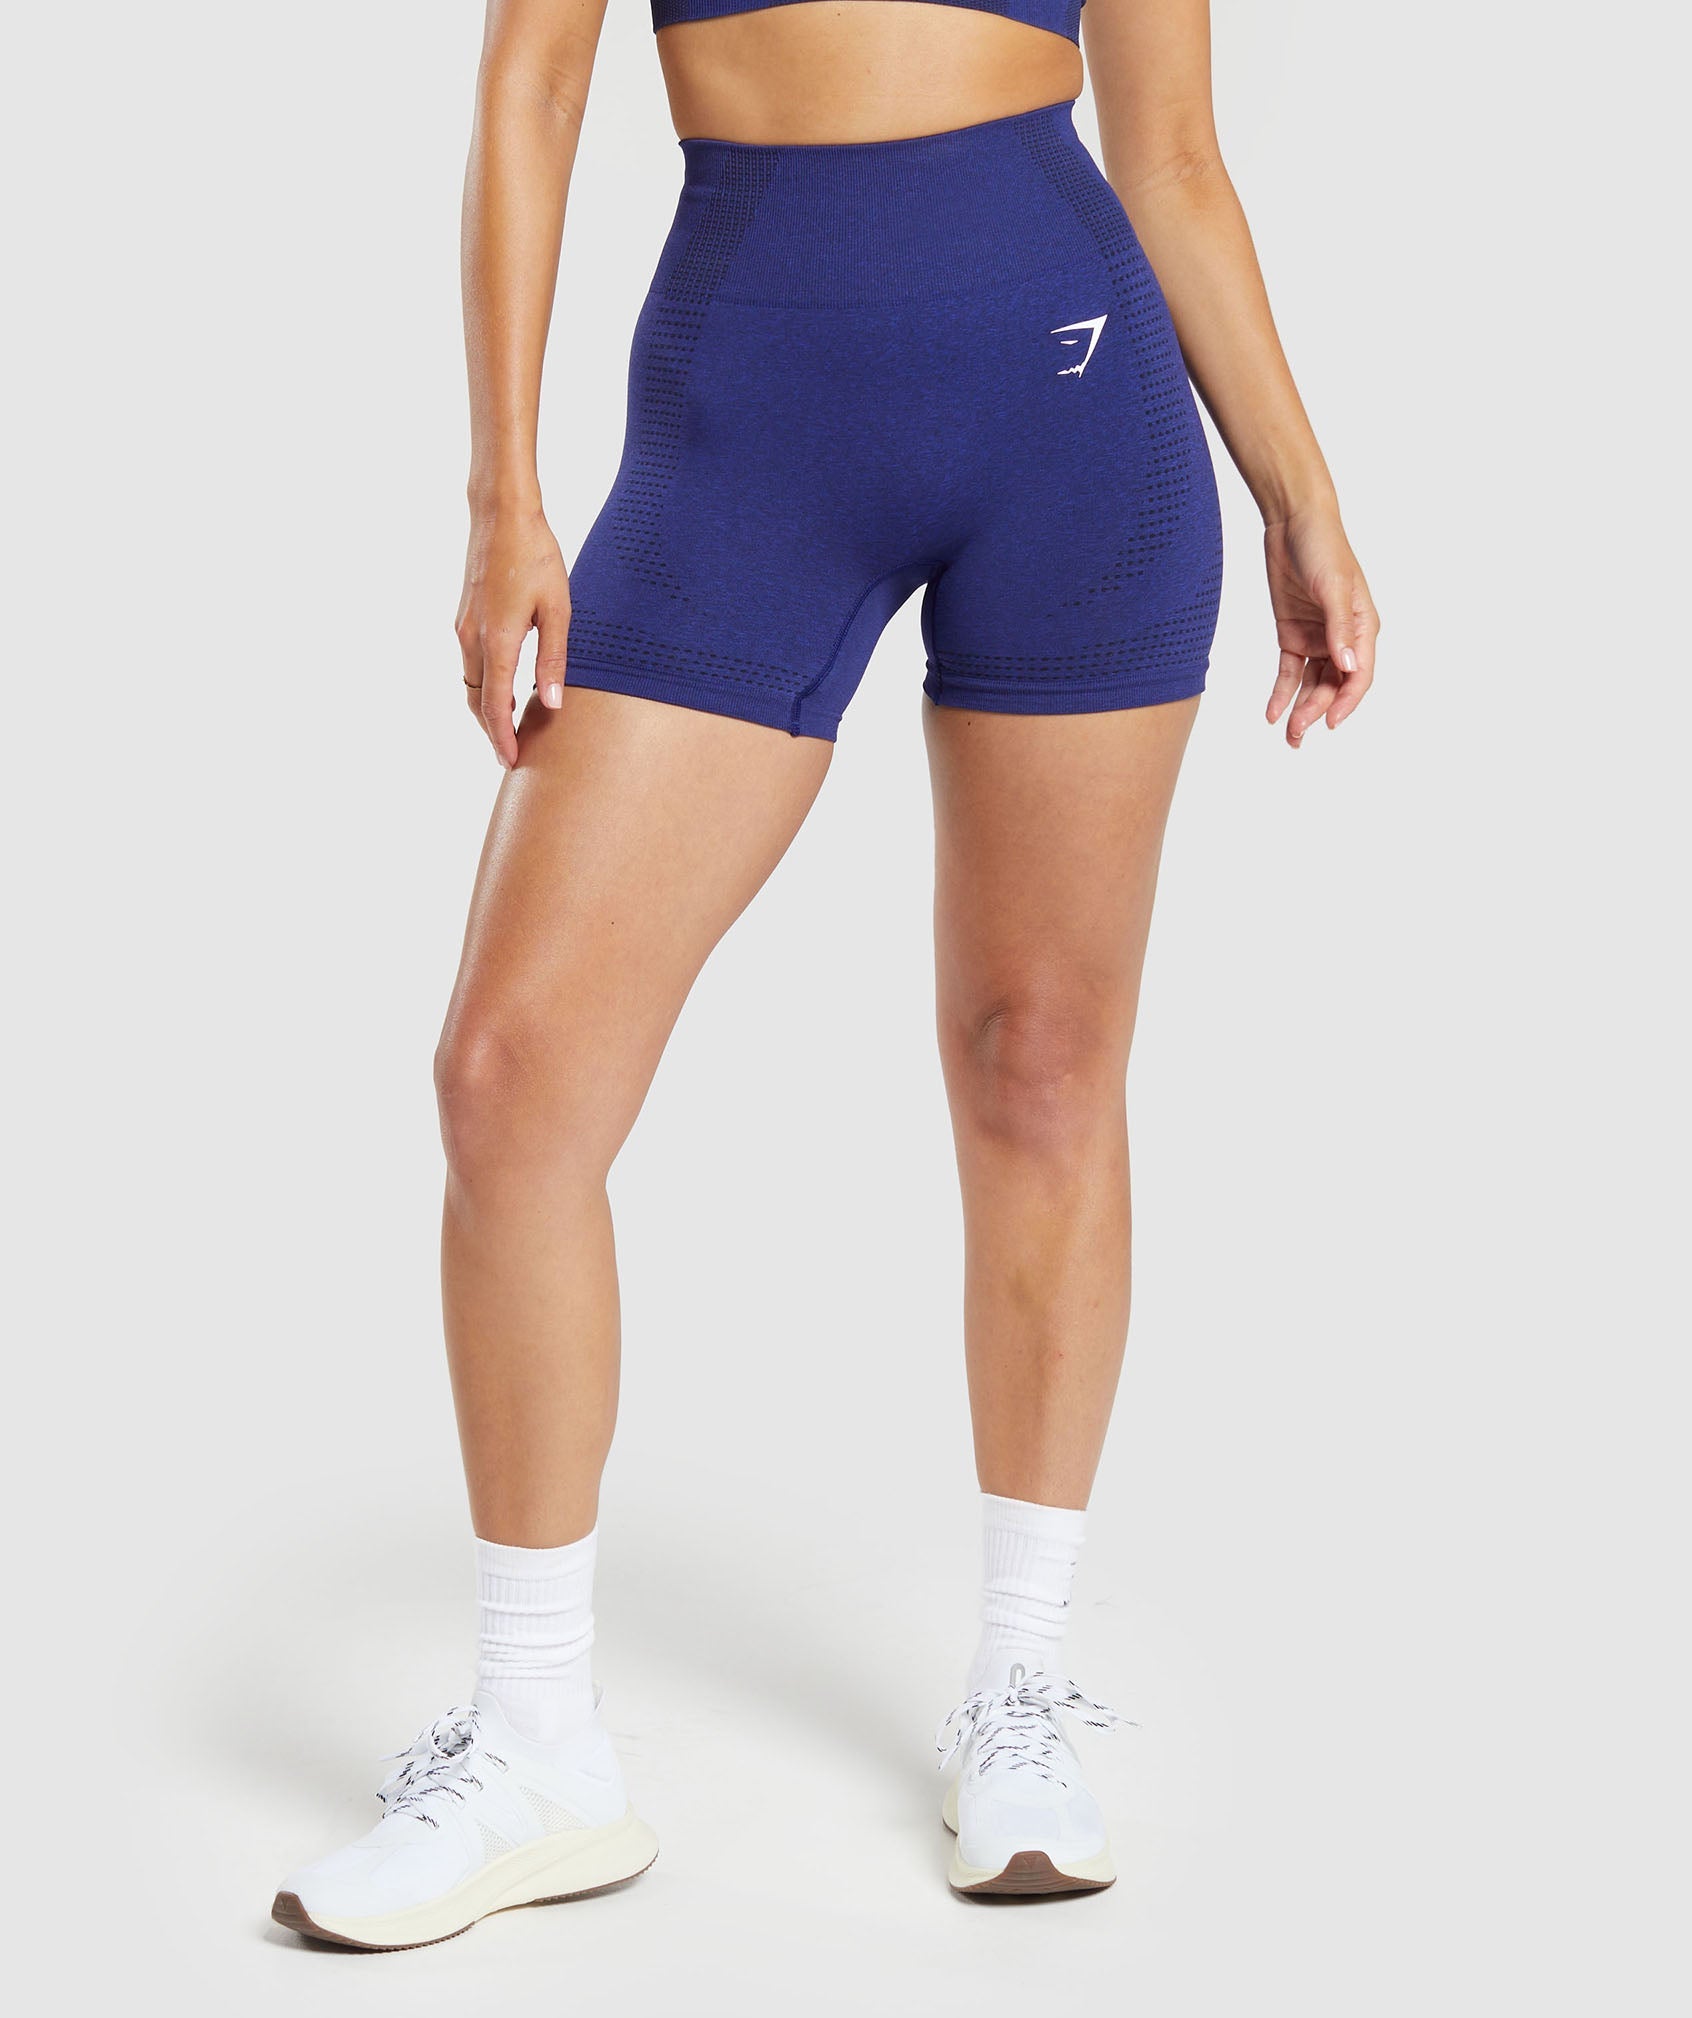 Vital Seamless 2.0 Shorts in Cobalt Purple Marl